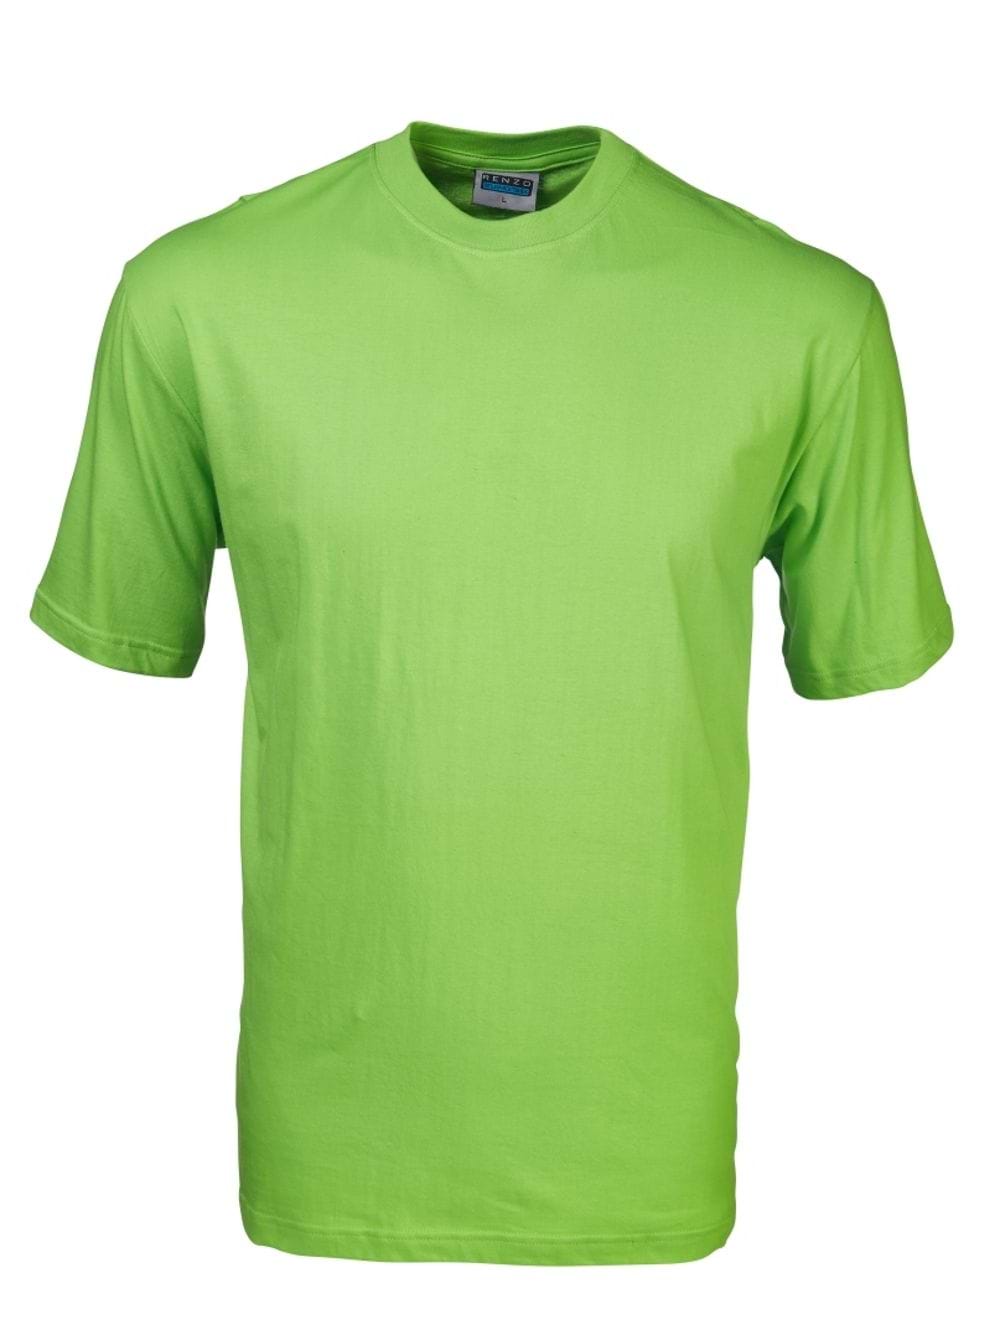 165G Crew Neck T-Shirt - Lime